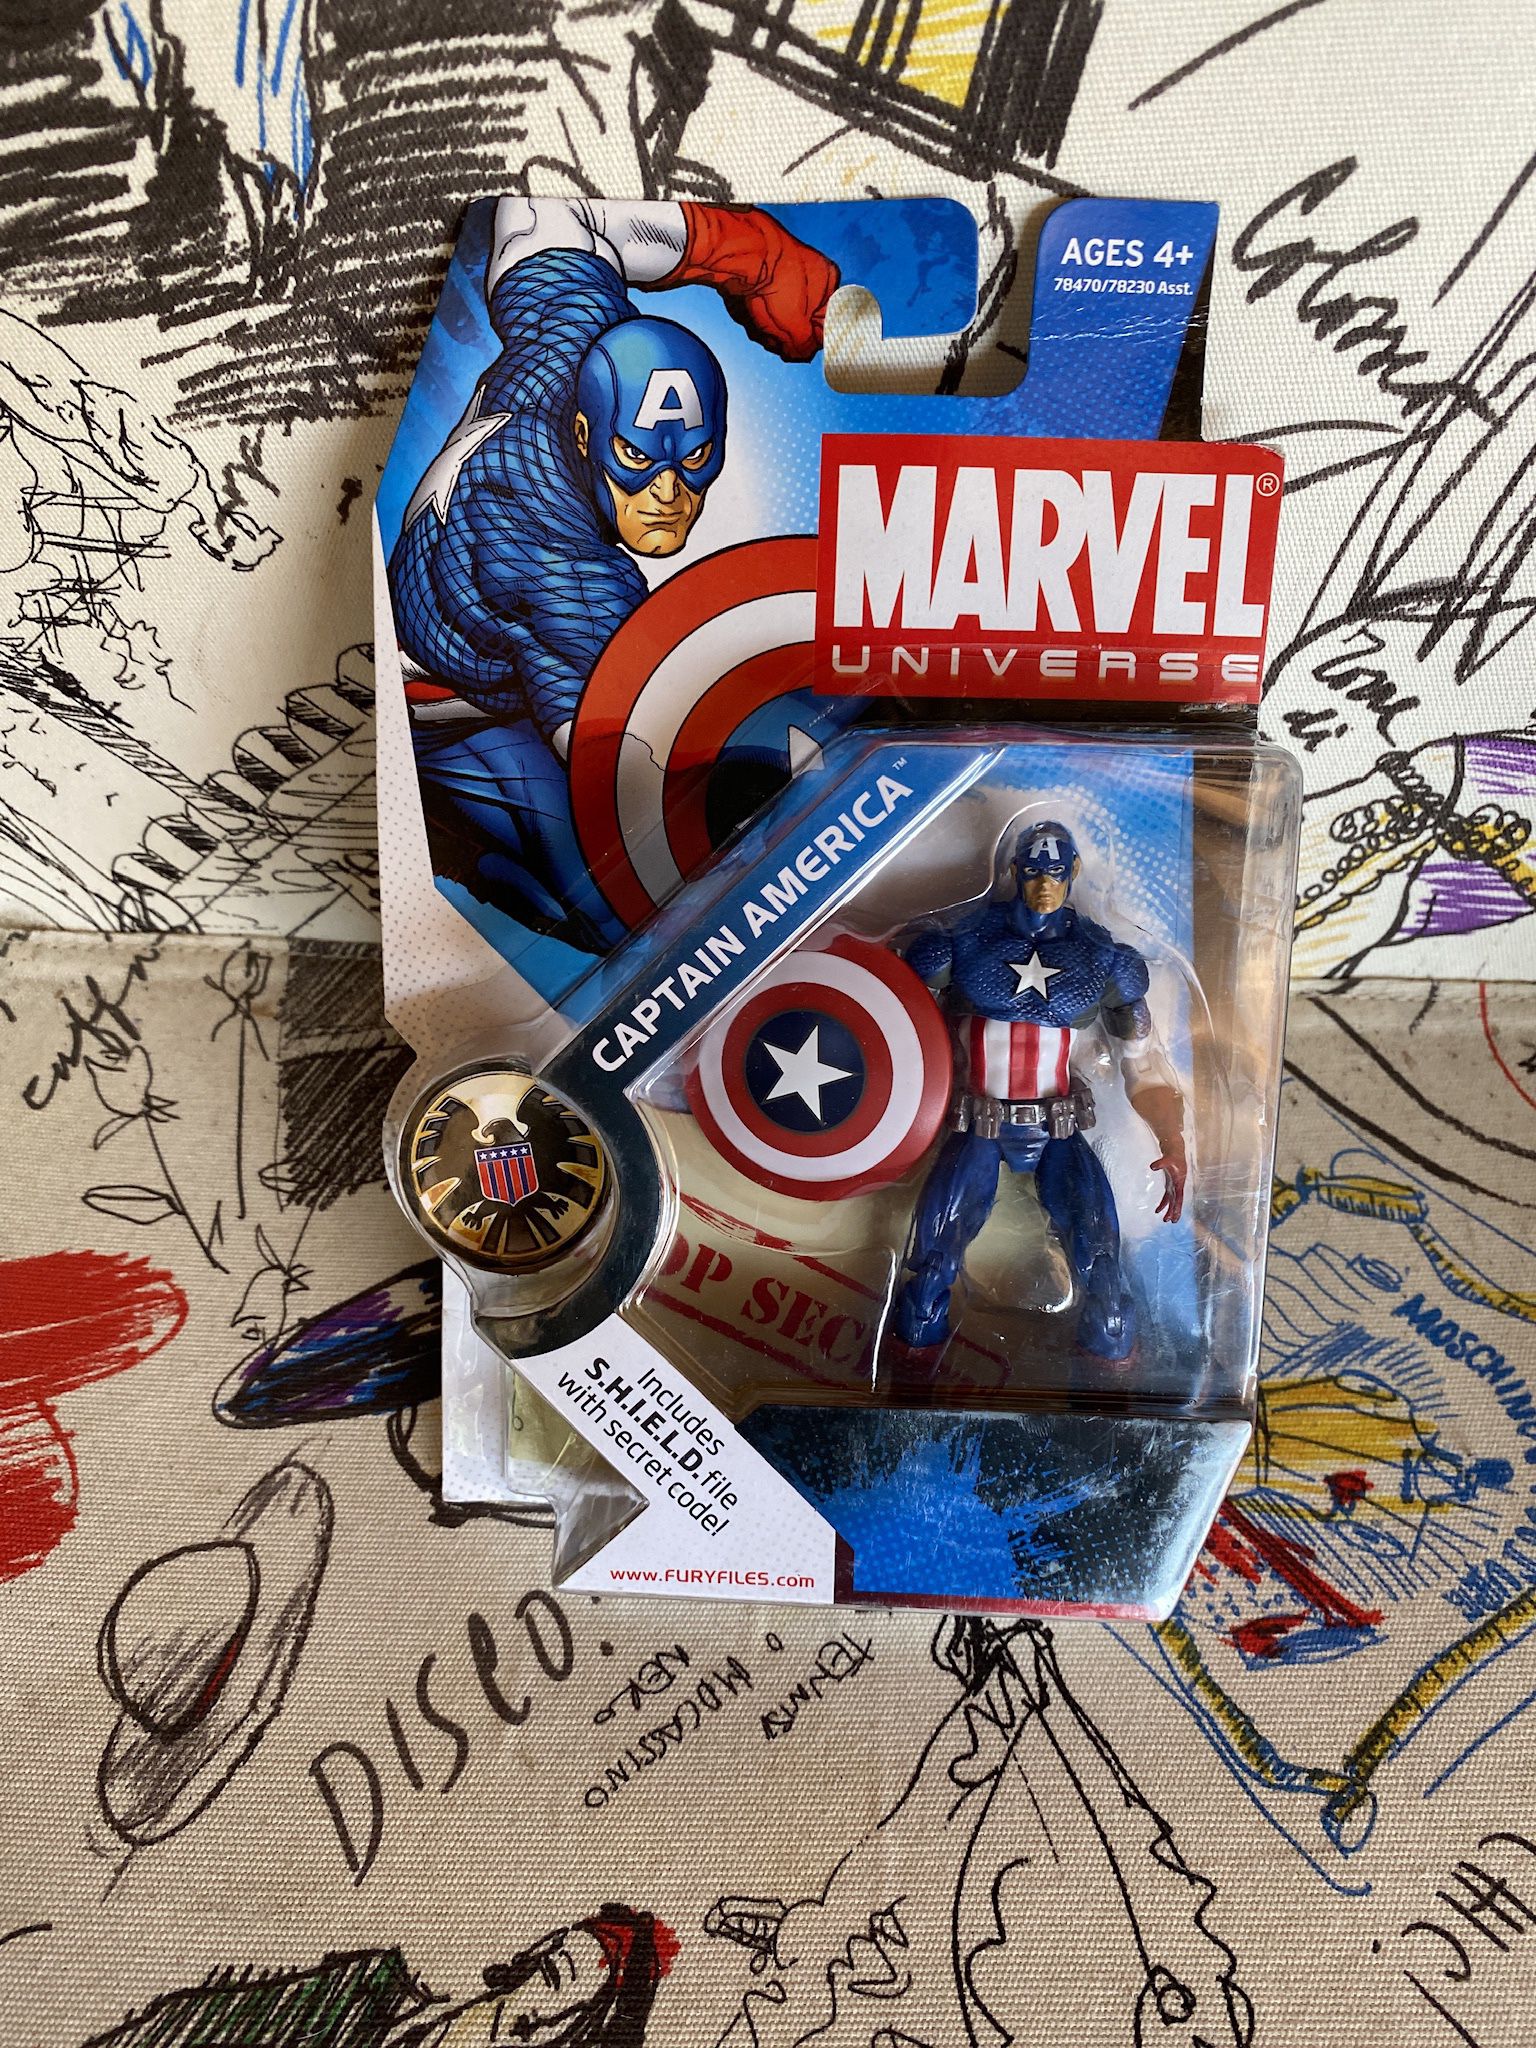 2008 & 2009 Captain America Action Figures Collectibles Toys